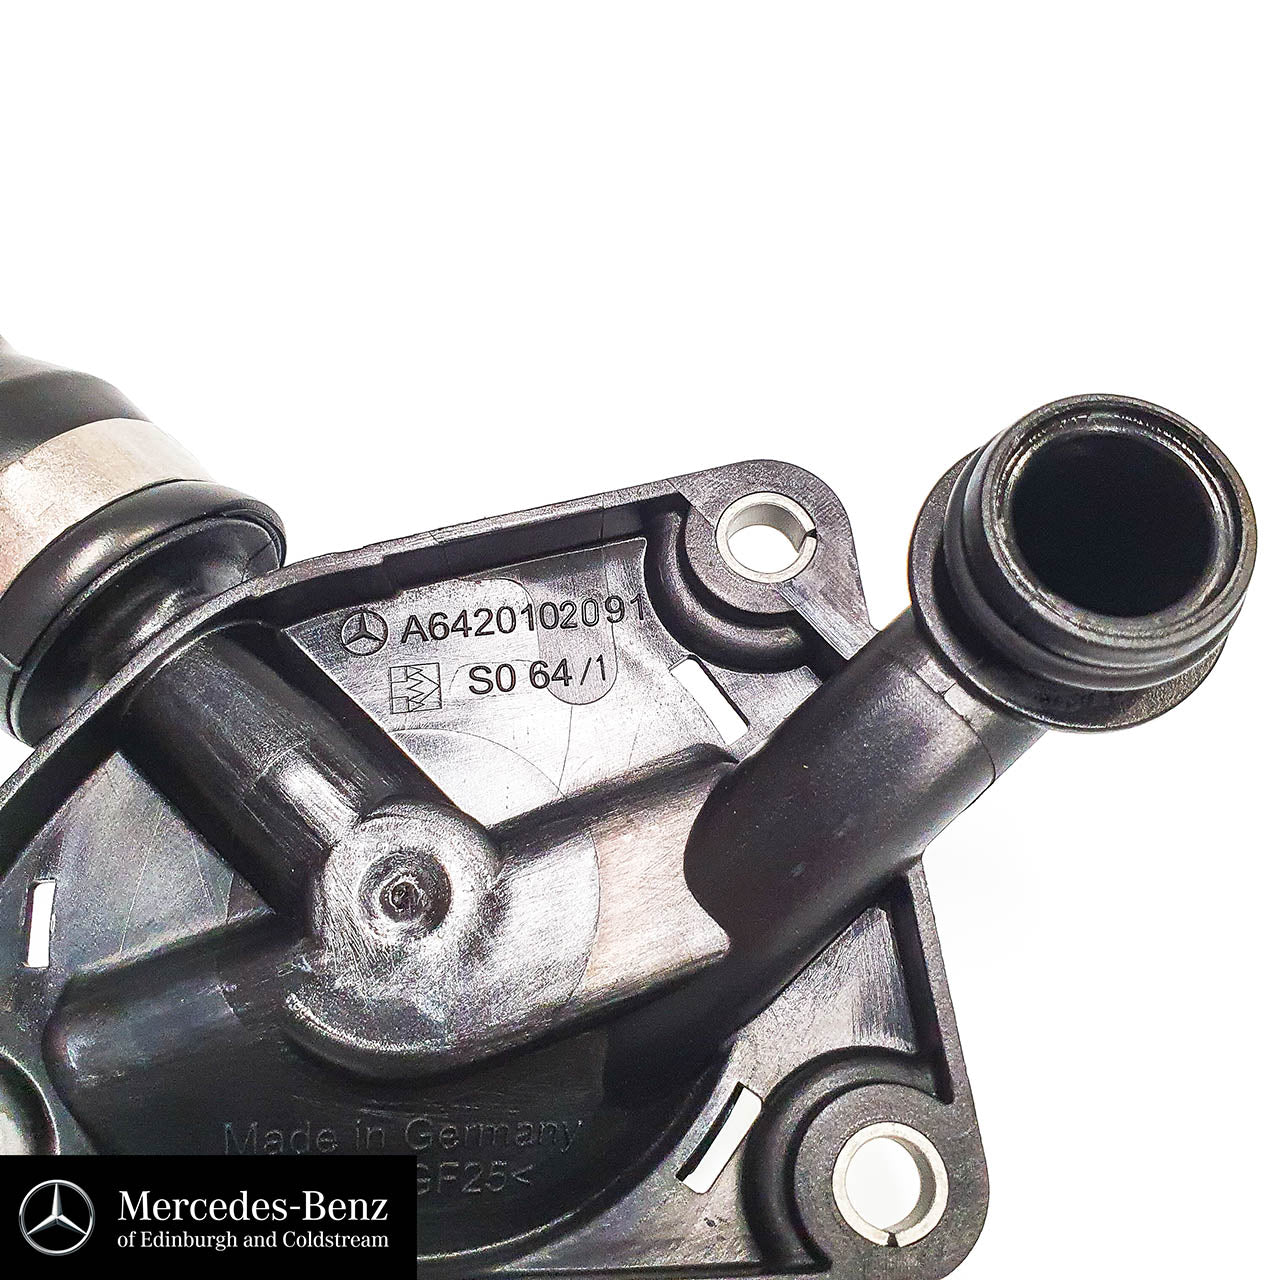 Genuine Mercedes-Benz bleed valve for OM642 diesel engine